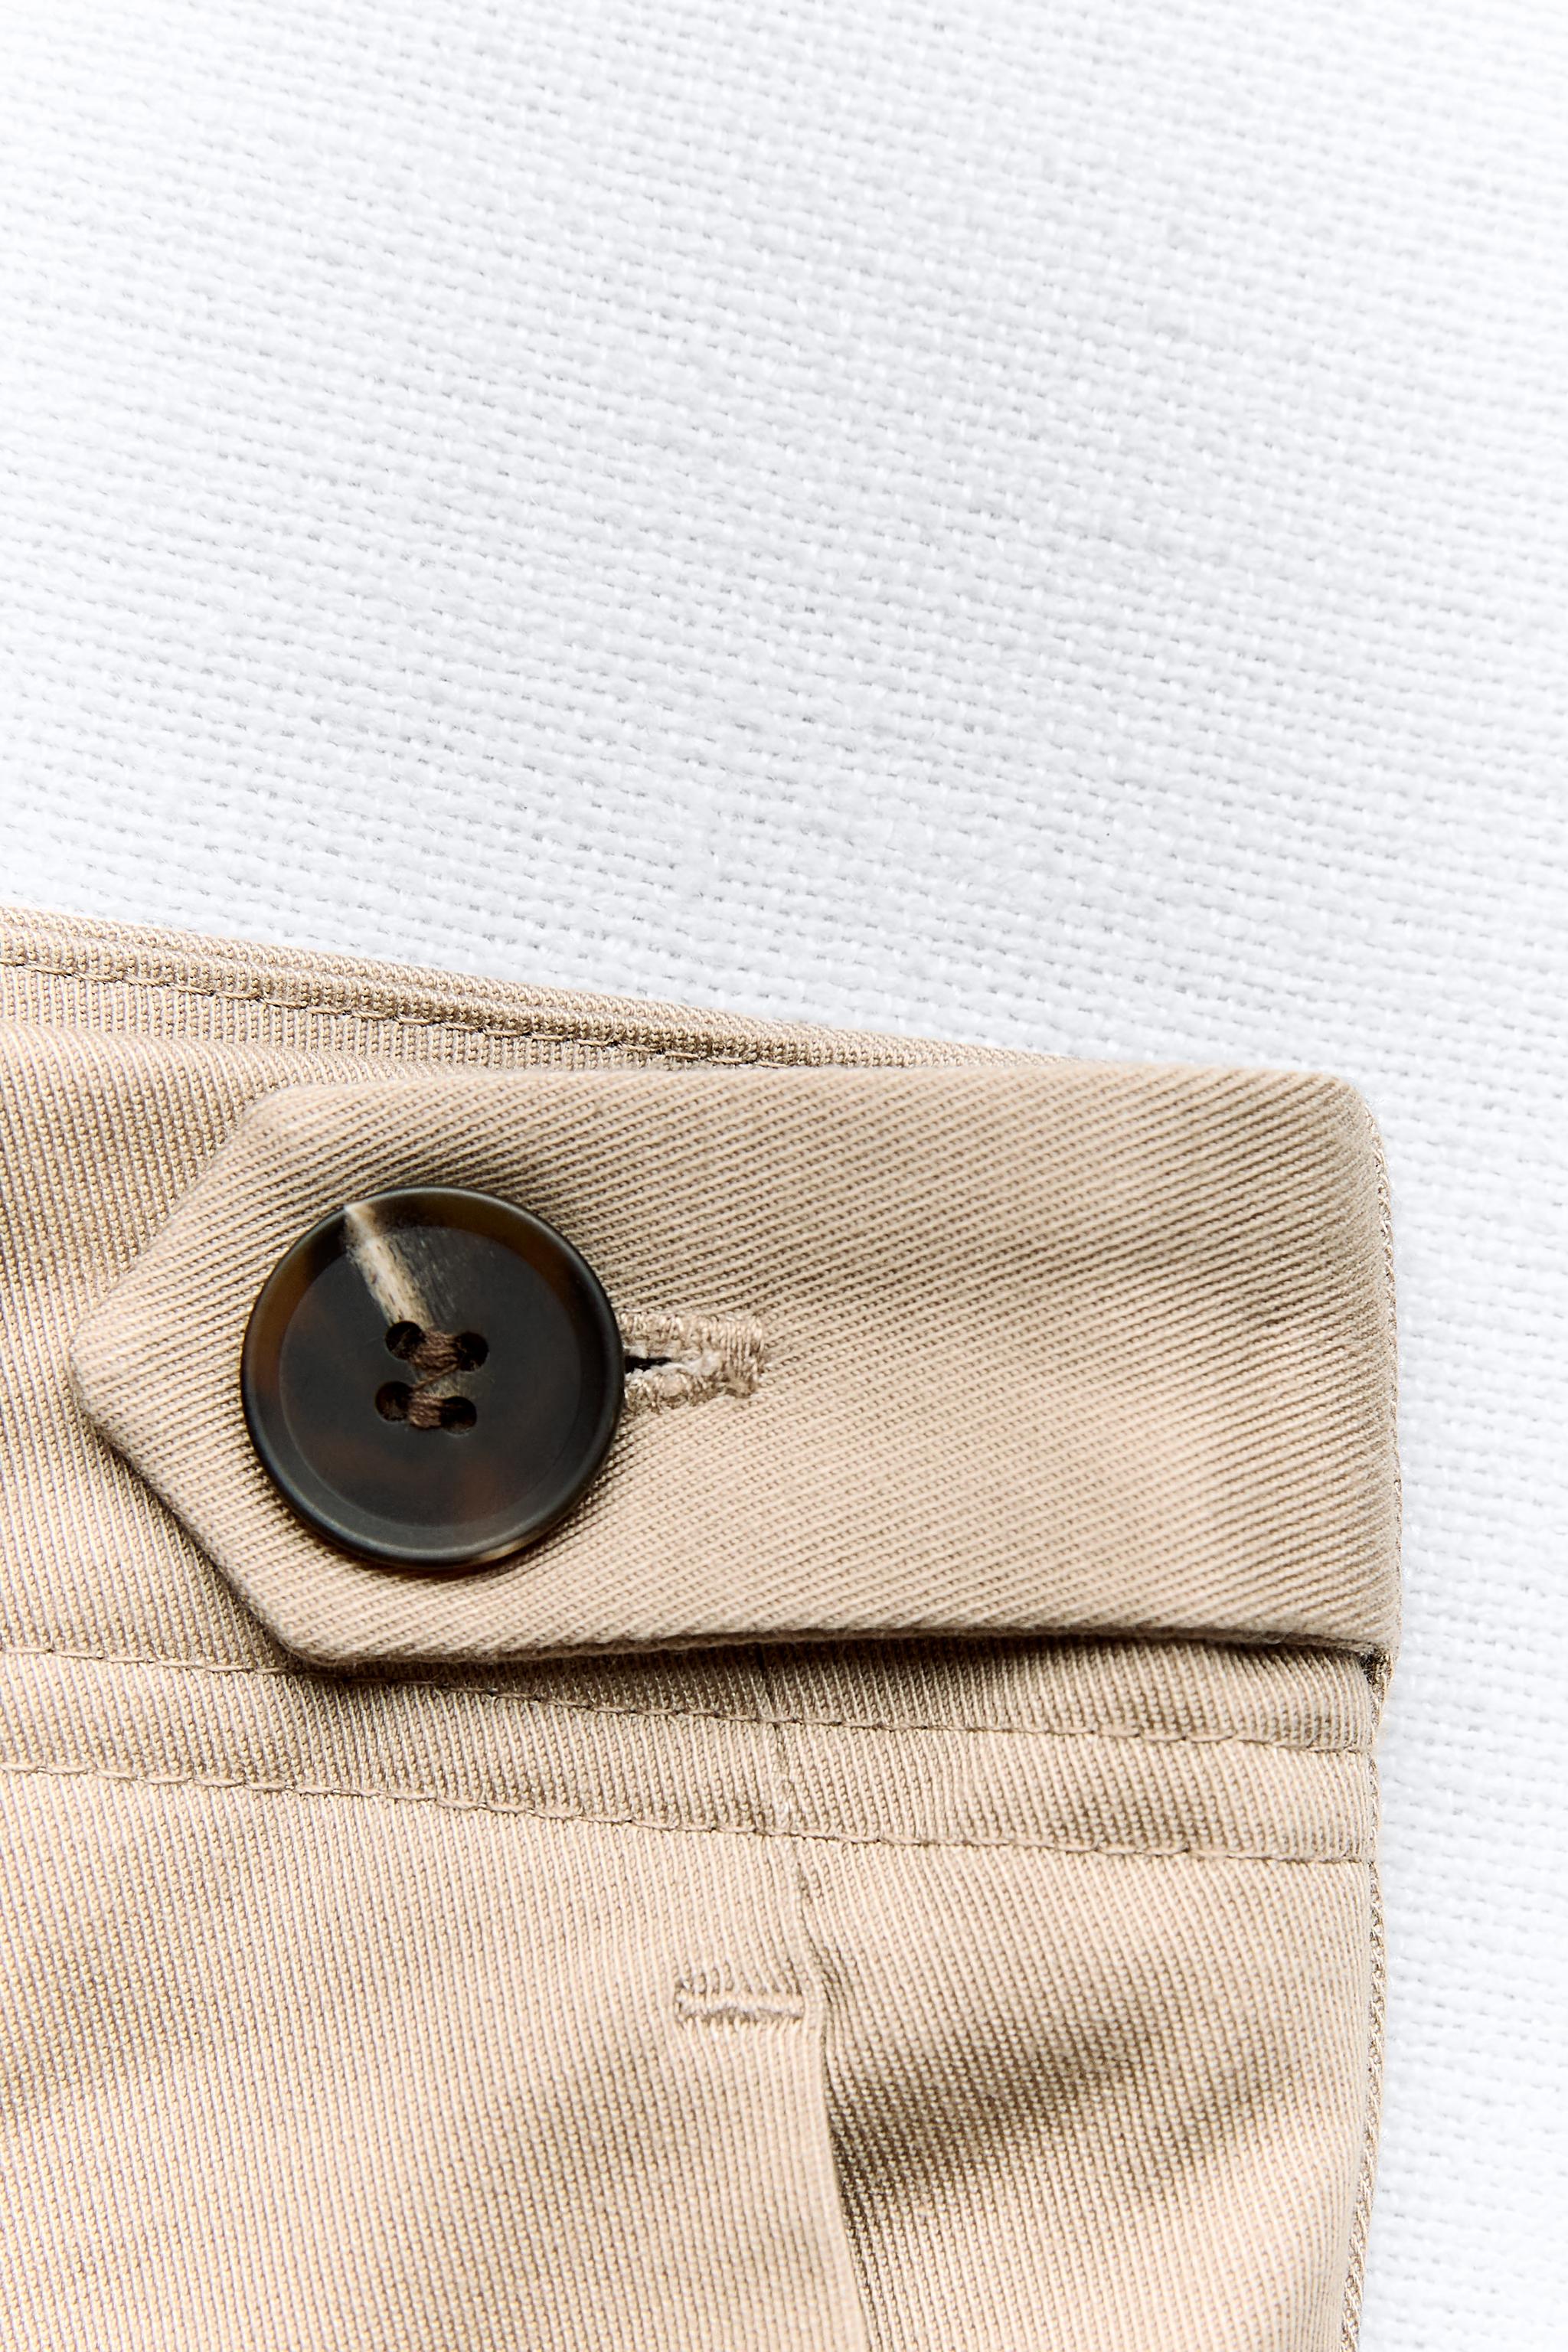 Zara Pants Beige Cargo Gold Buttons Straight Leg Button size XS,S .M NWT#K